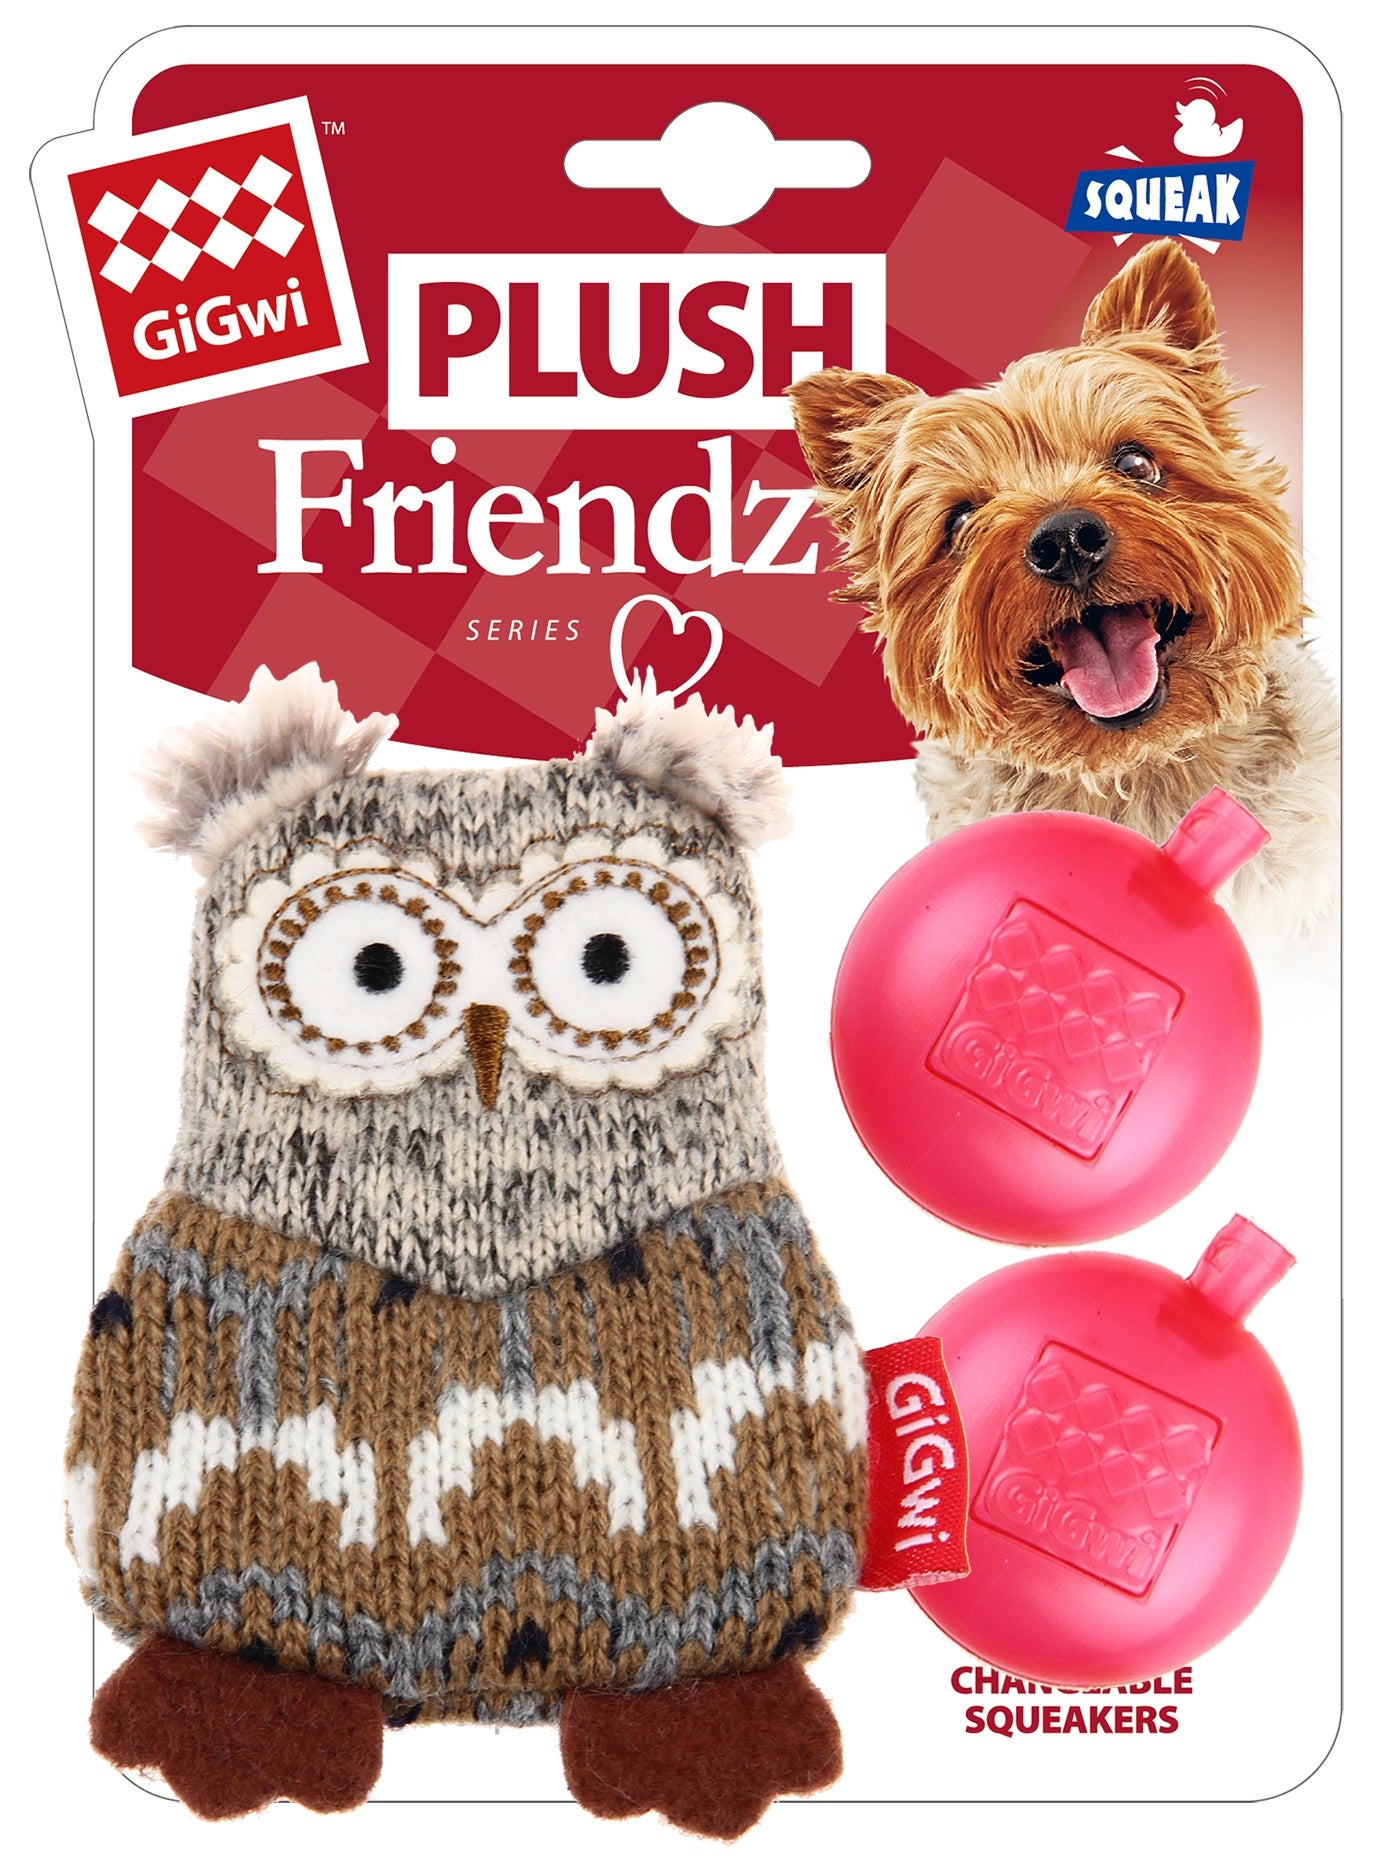 Gigwi Owl Plush Friendz With Refillable Squeaker Dog Toy - Grey/Brown